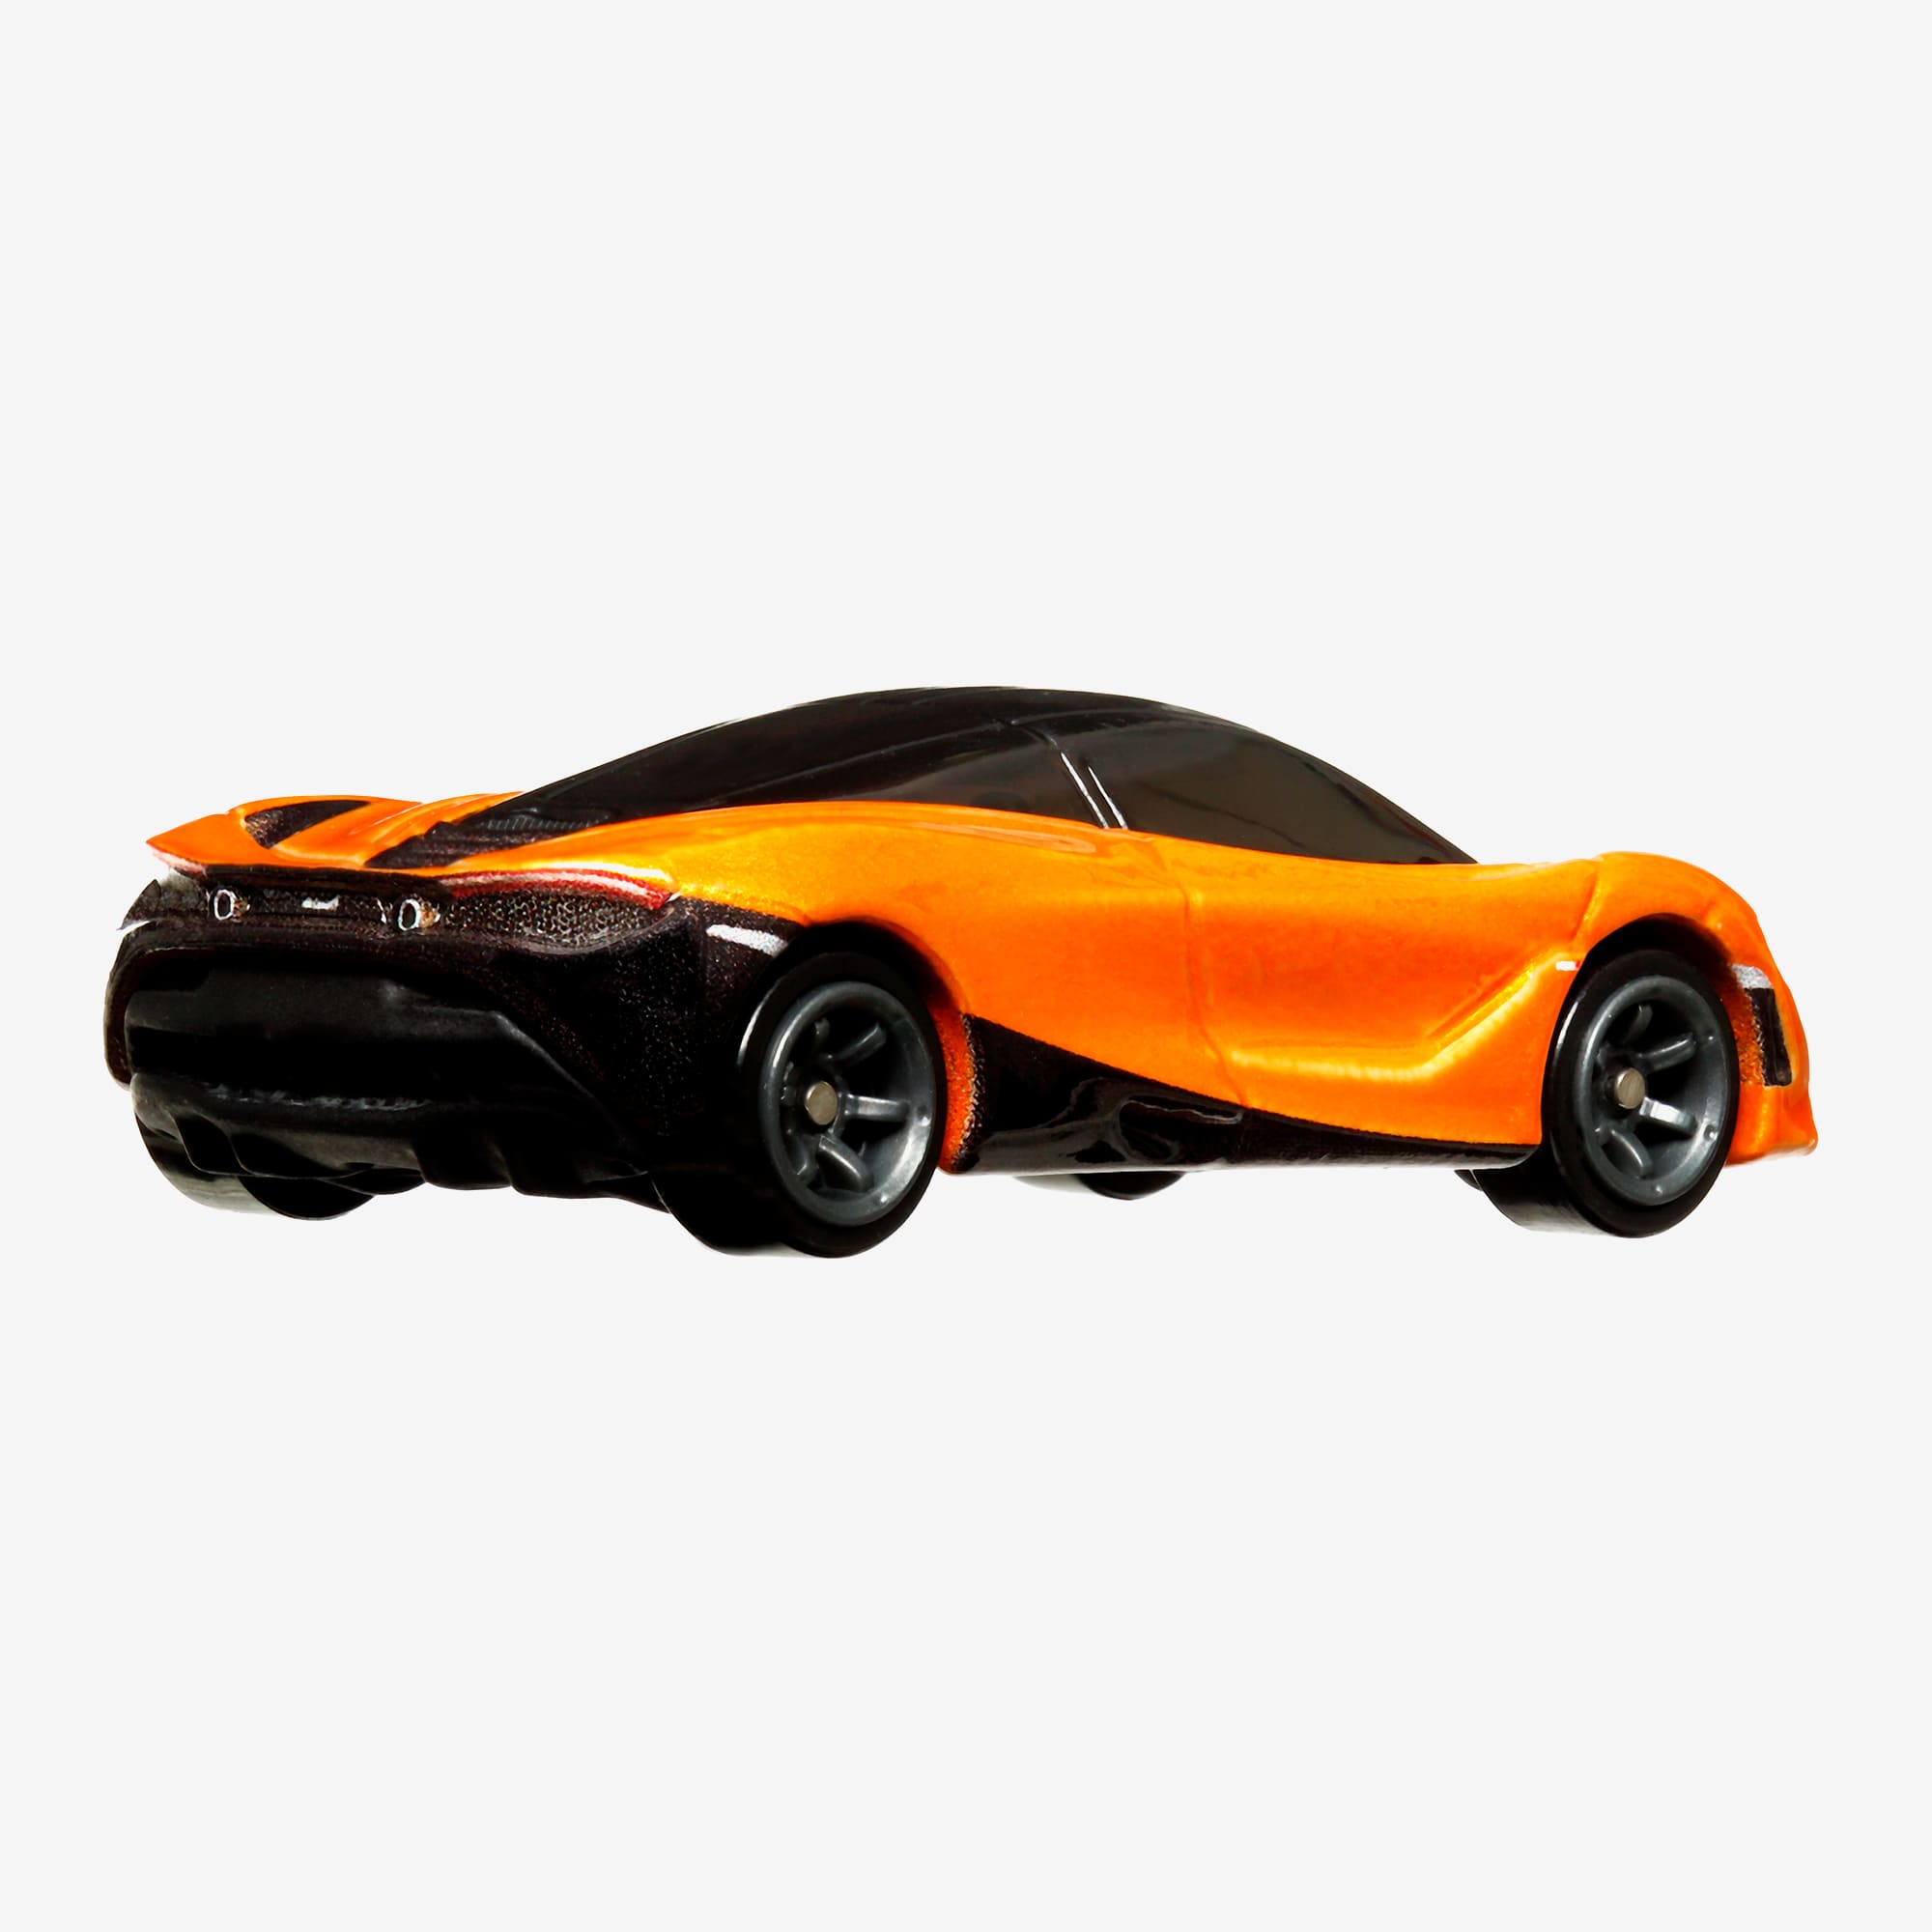 Hot Wheels Premium Car Culture Speed Machines – McLaren 720S